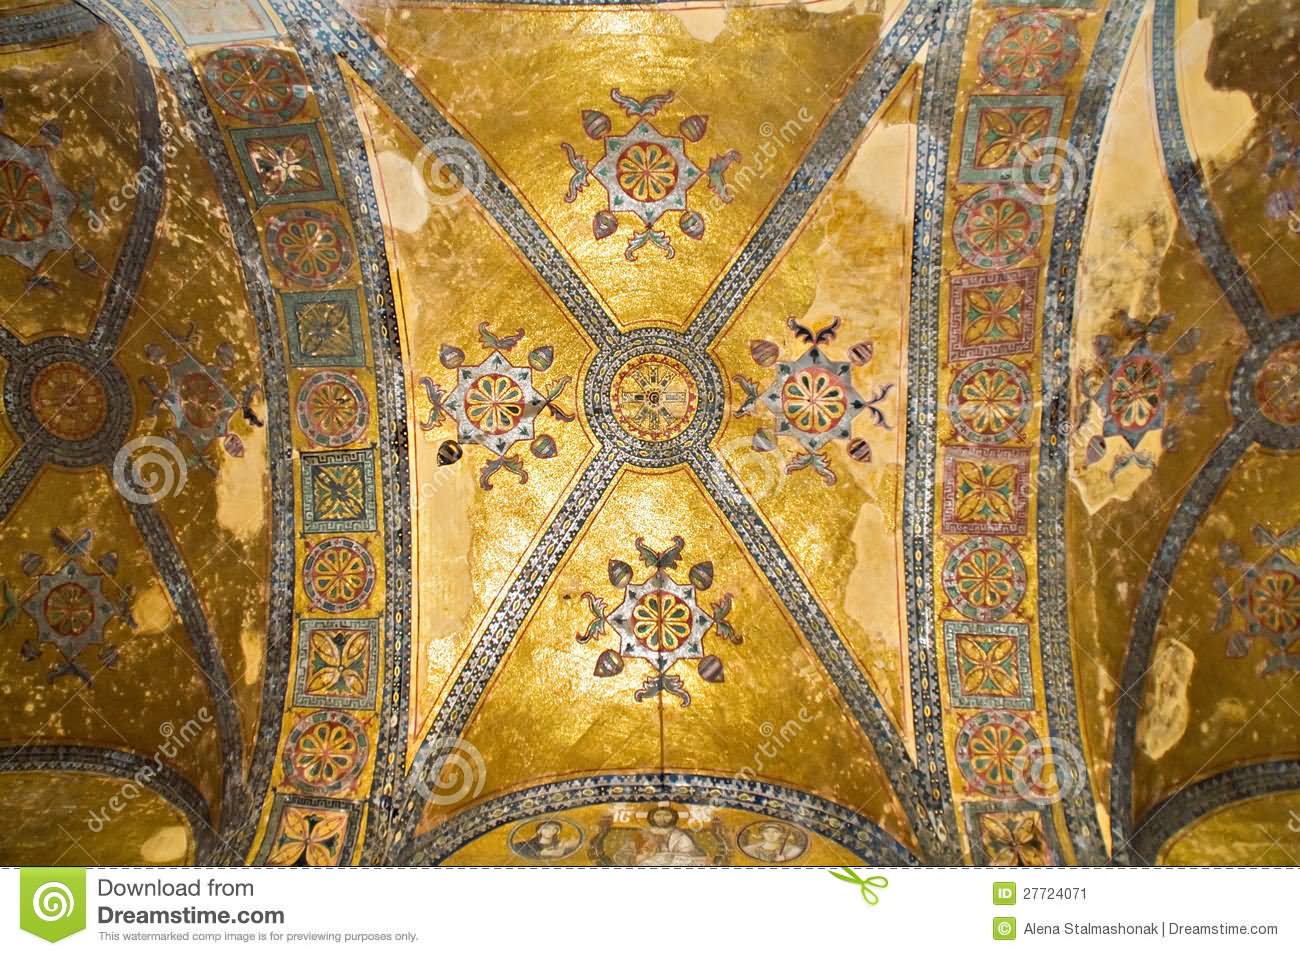 The Mosaic Ceiling Inside The Hagia Sophia Mosque